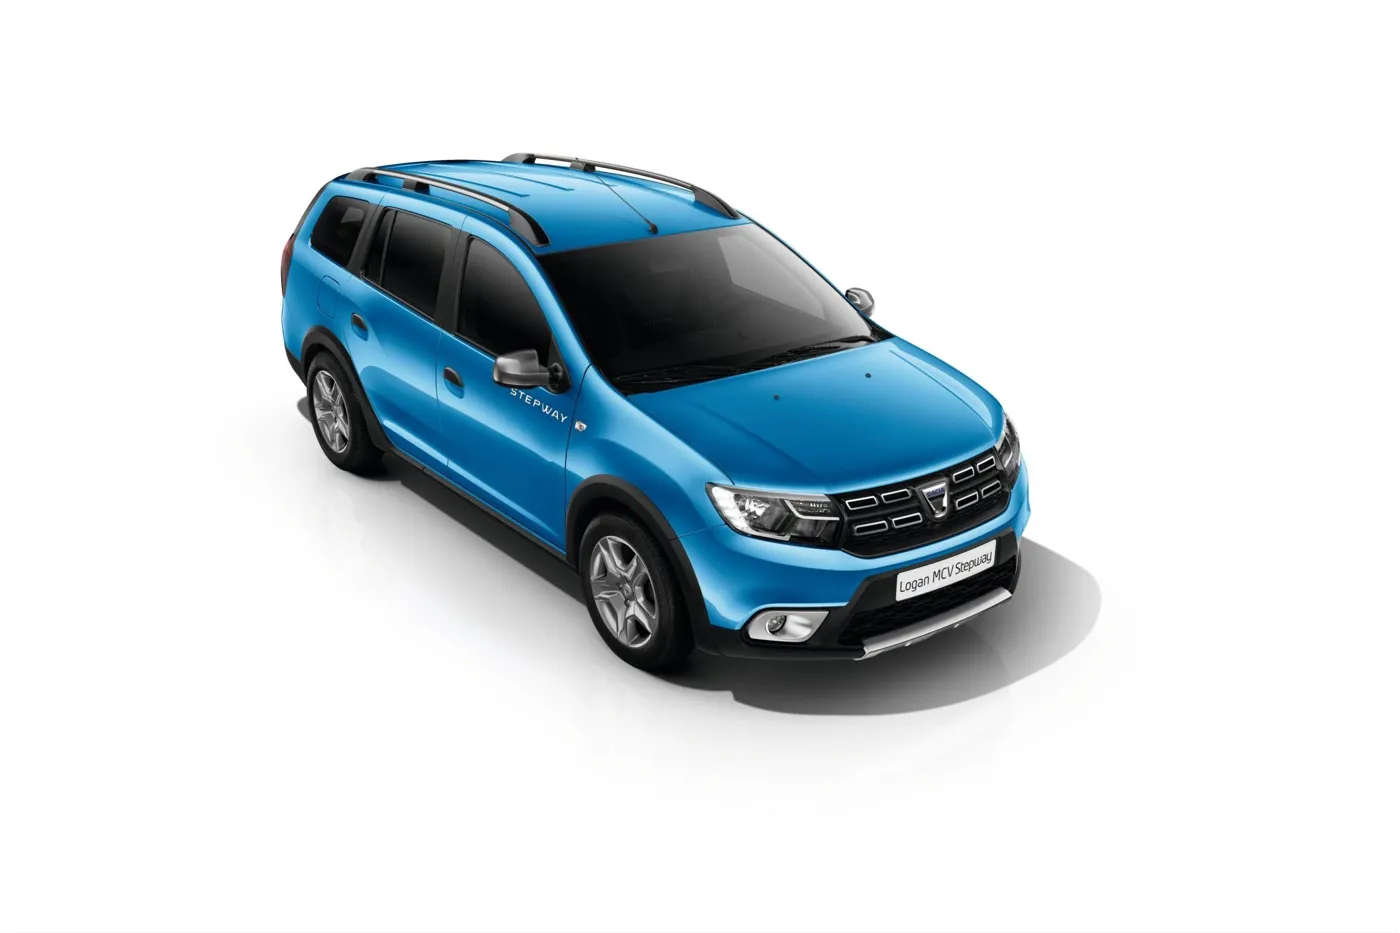 Dacia Logan MCV Stepway priced from £11,495